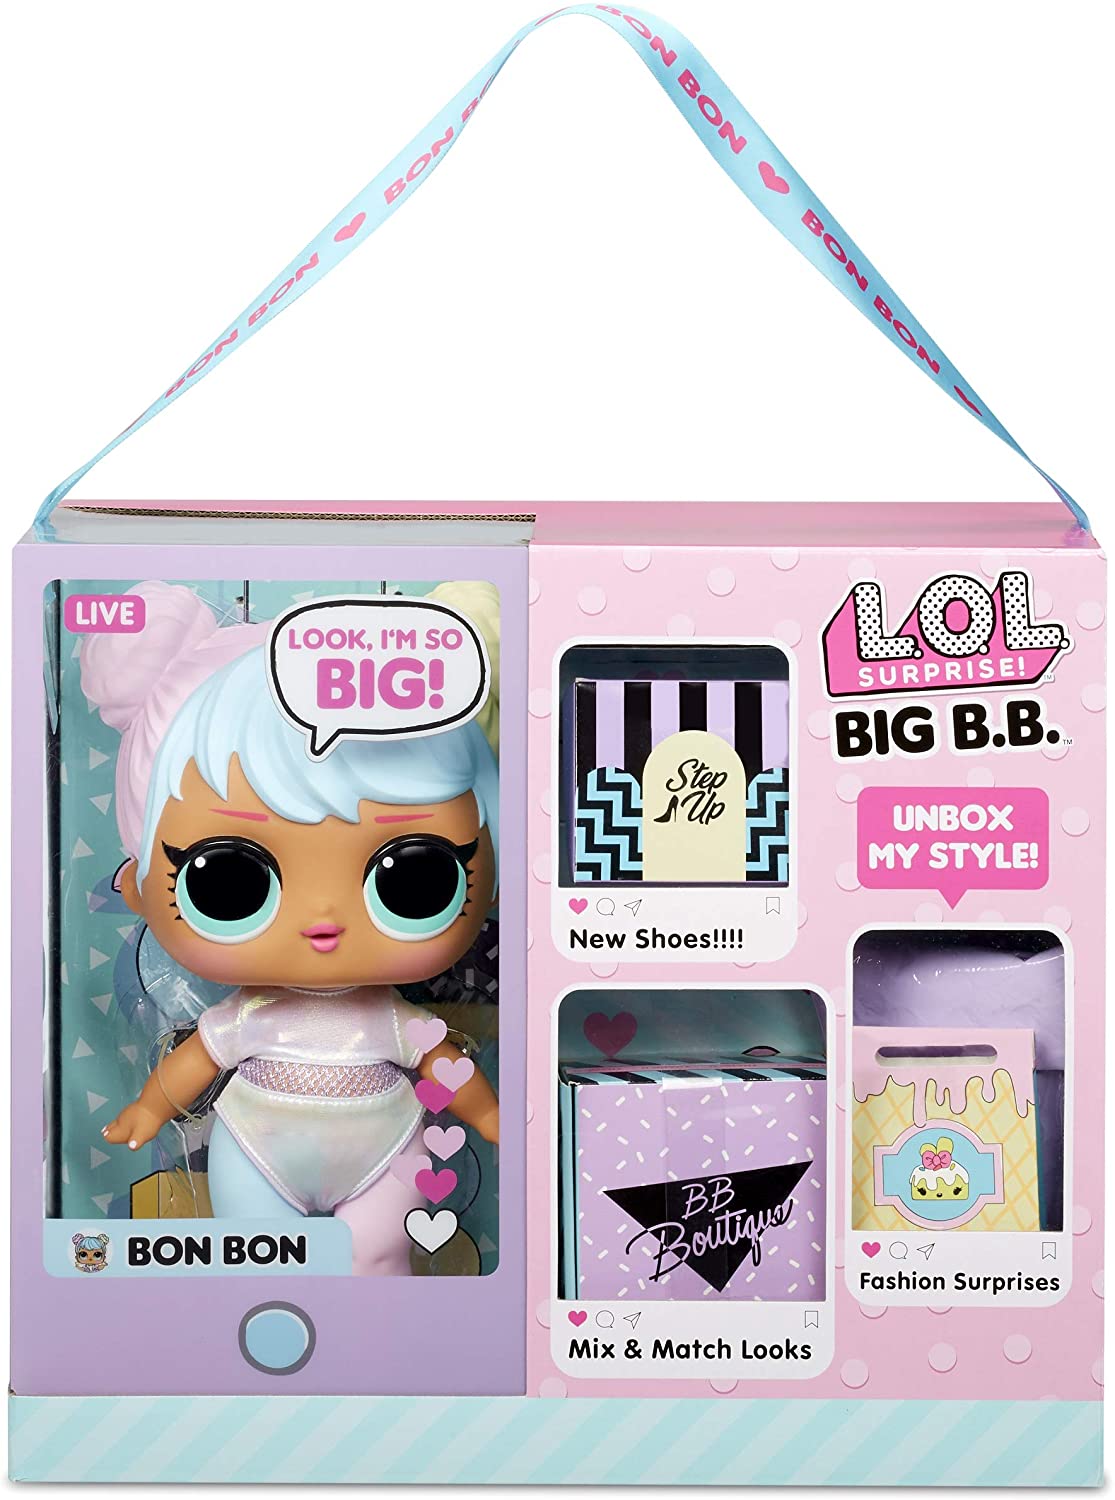 LOL Big B.B. (Big Baby) Bon Bon is up for pre-order on Amazon - YouLoveIt.com